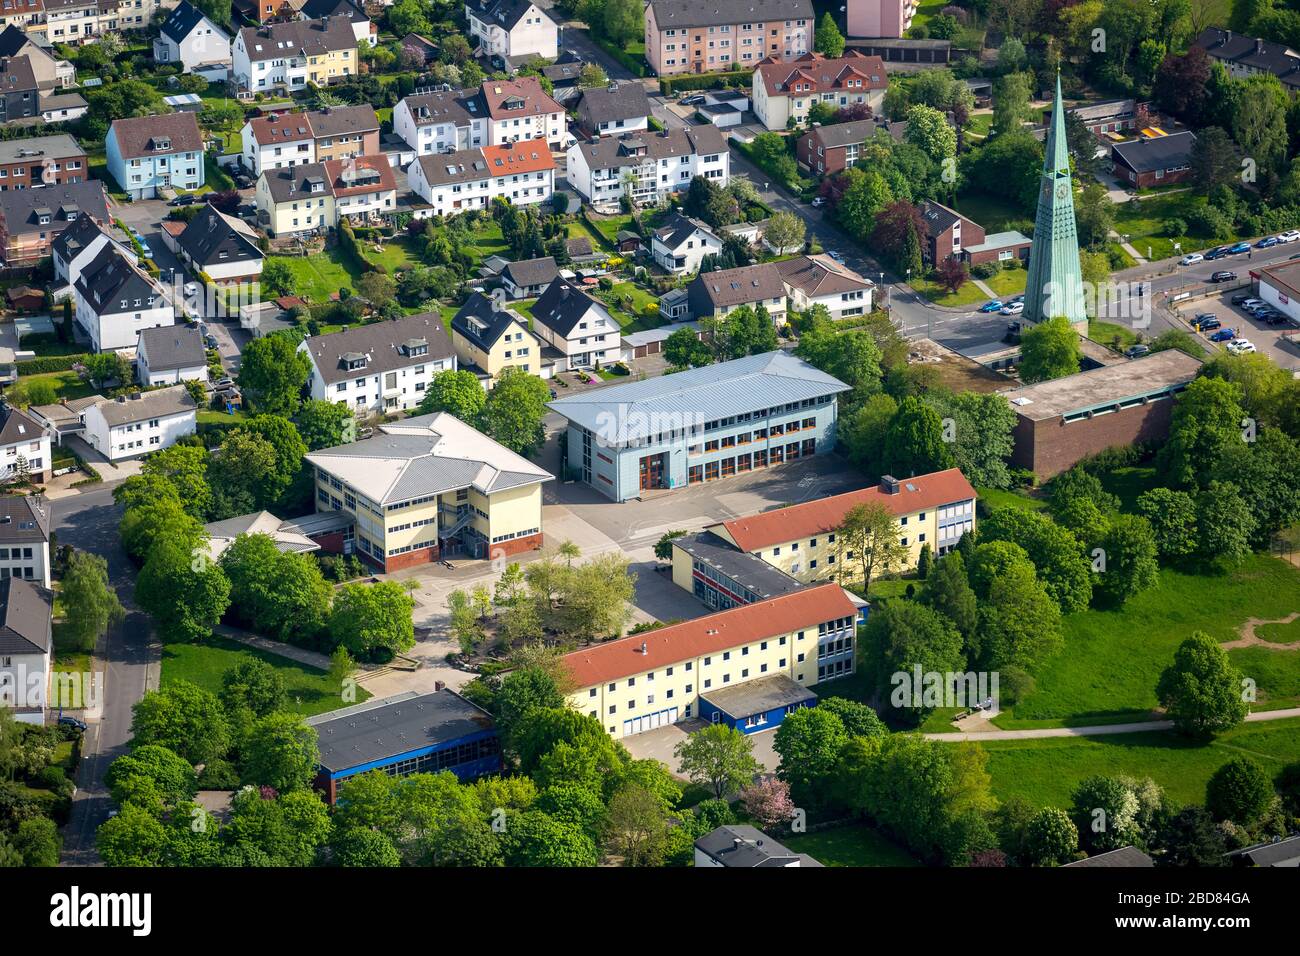 schools Hagenschule, KEO Schule and Realschule and church Matthaeus at Luetzowstrasse in Hagen, 09.05.2016, aerial view, Germany, North Rhine-Westphalia, Ruhr Area, Hagen Stock Photo